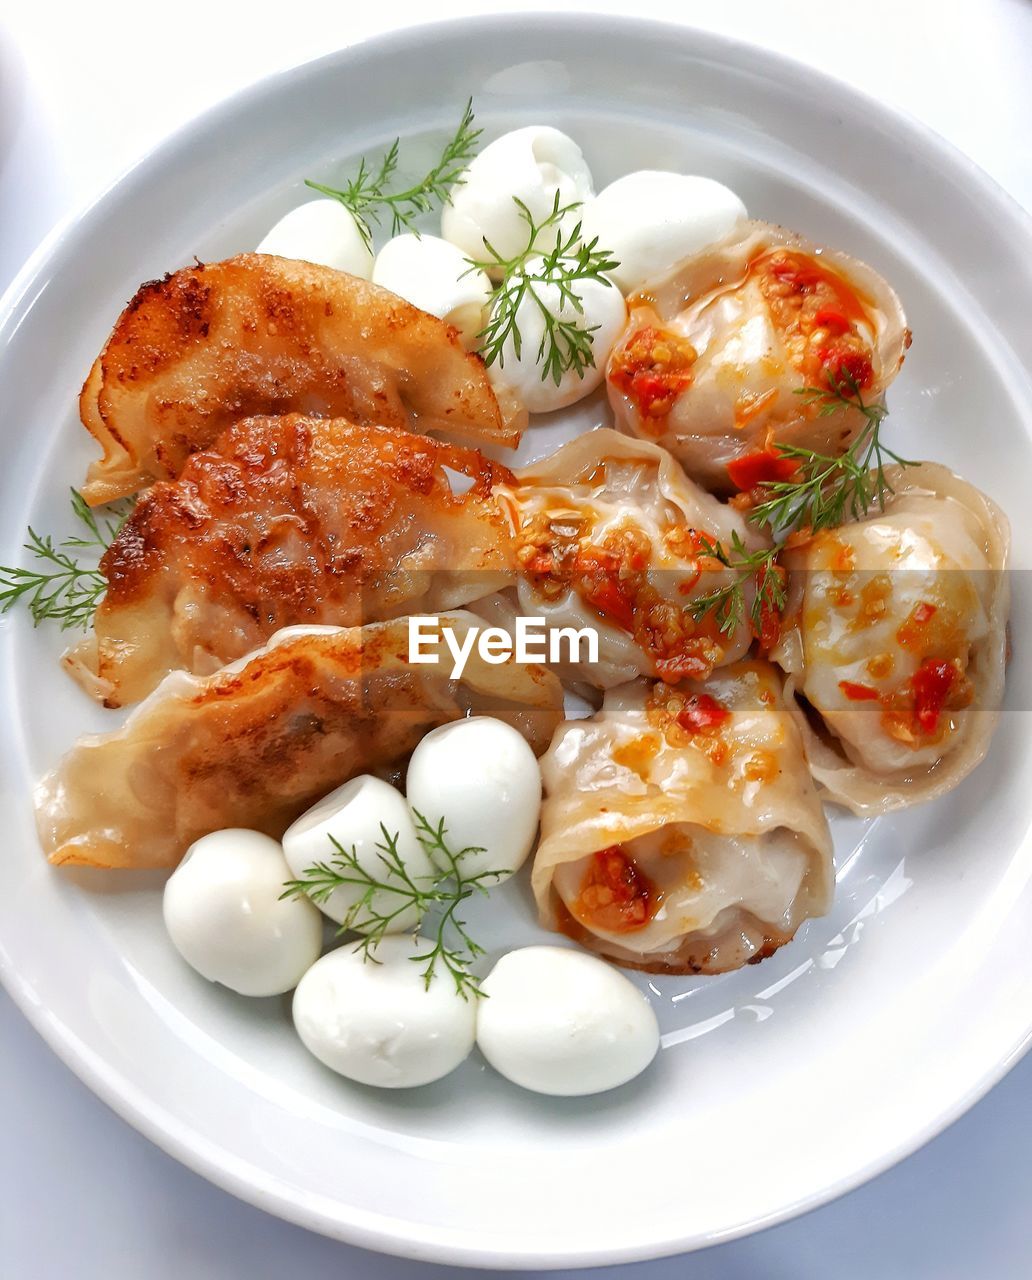 Dumplings and quail eggs